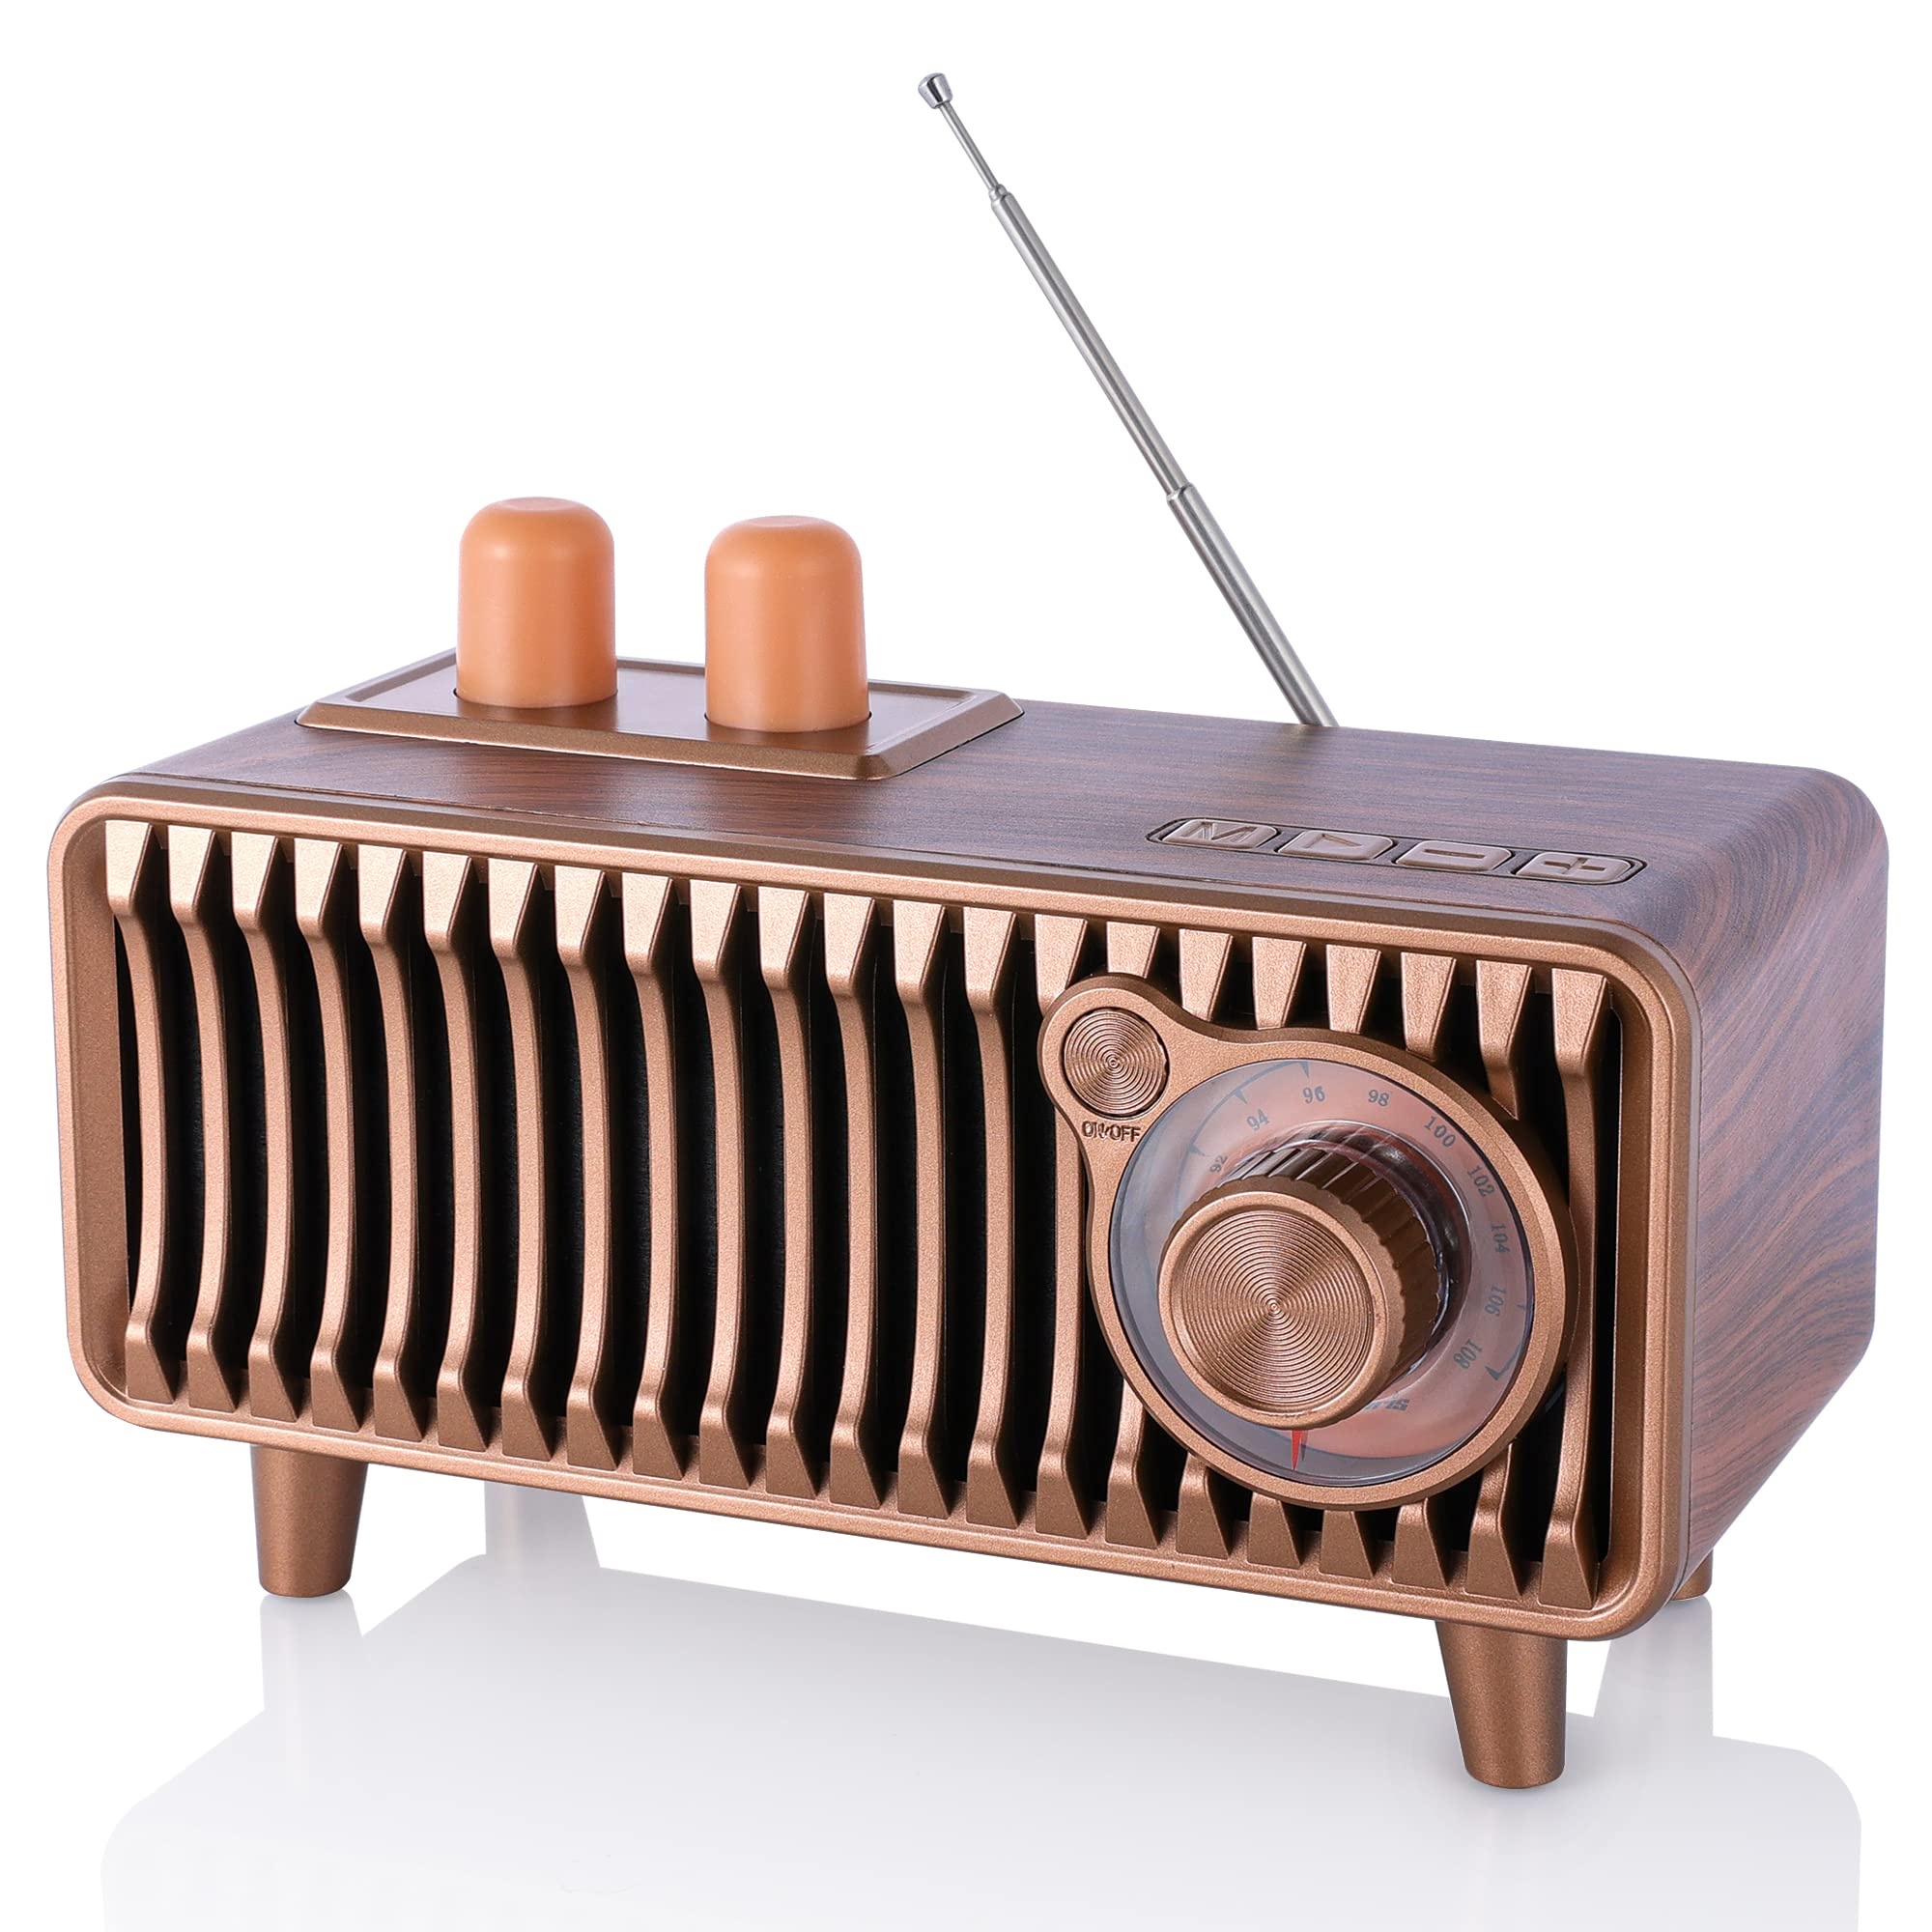 CYBORIS Retro Bluetooth-Lautsprecher-Radio,Walnussholz Vintage Rotary FM Radio, 20W Dual-Speaker Stereo, tragbare kabellose Lautsprecher mit U Disk/TF Card/Aux Music Player (Walnut Wood)